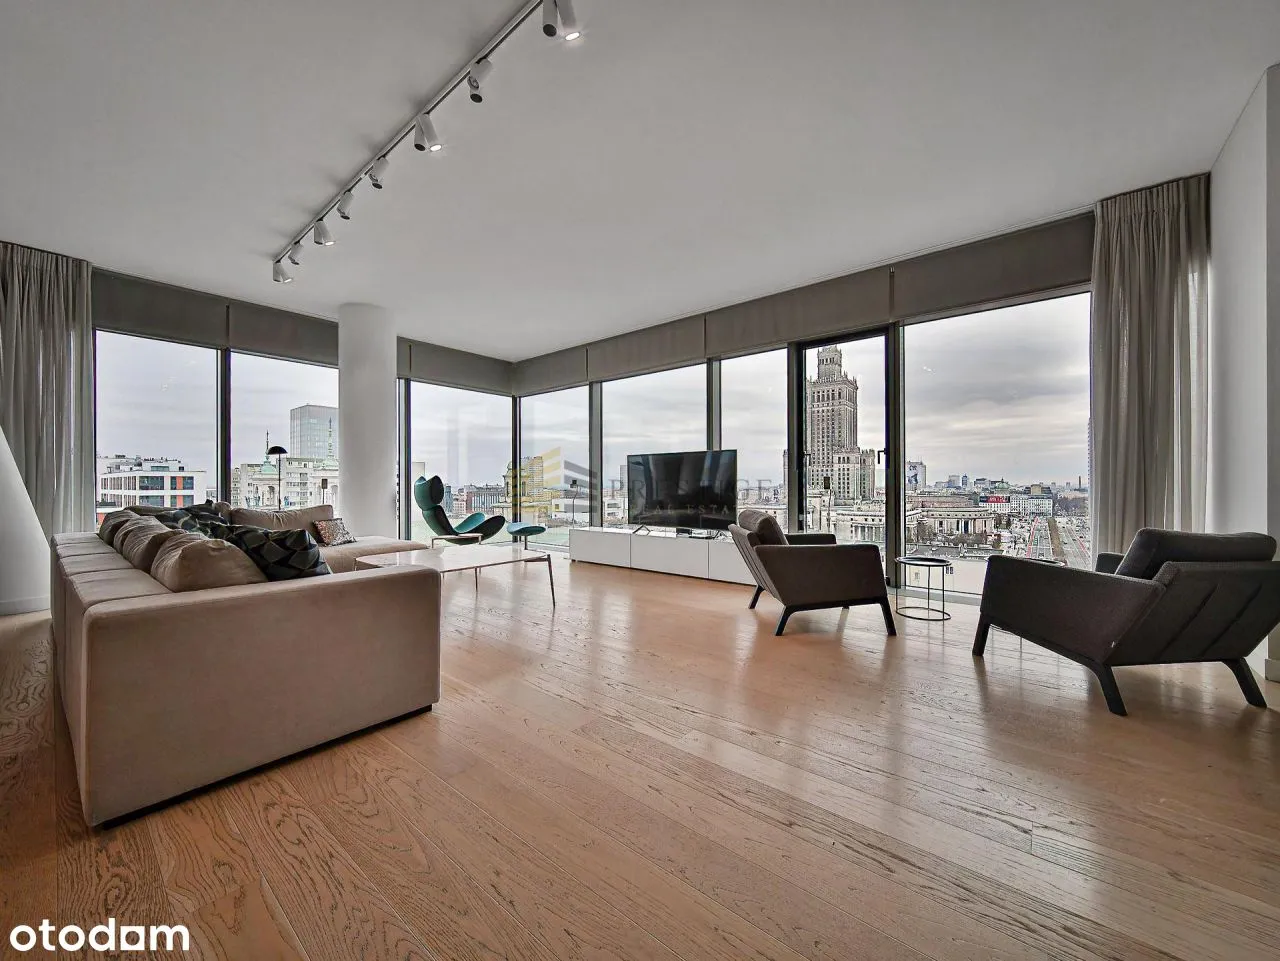 Luxurious Cosmopolitan Apartment & Panoramic View